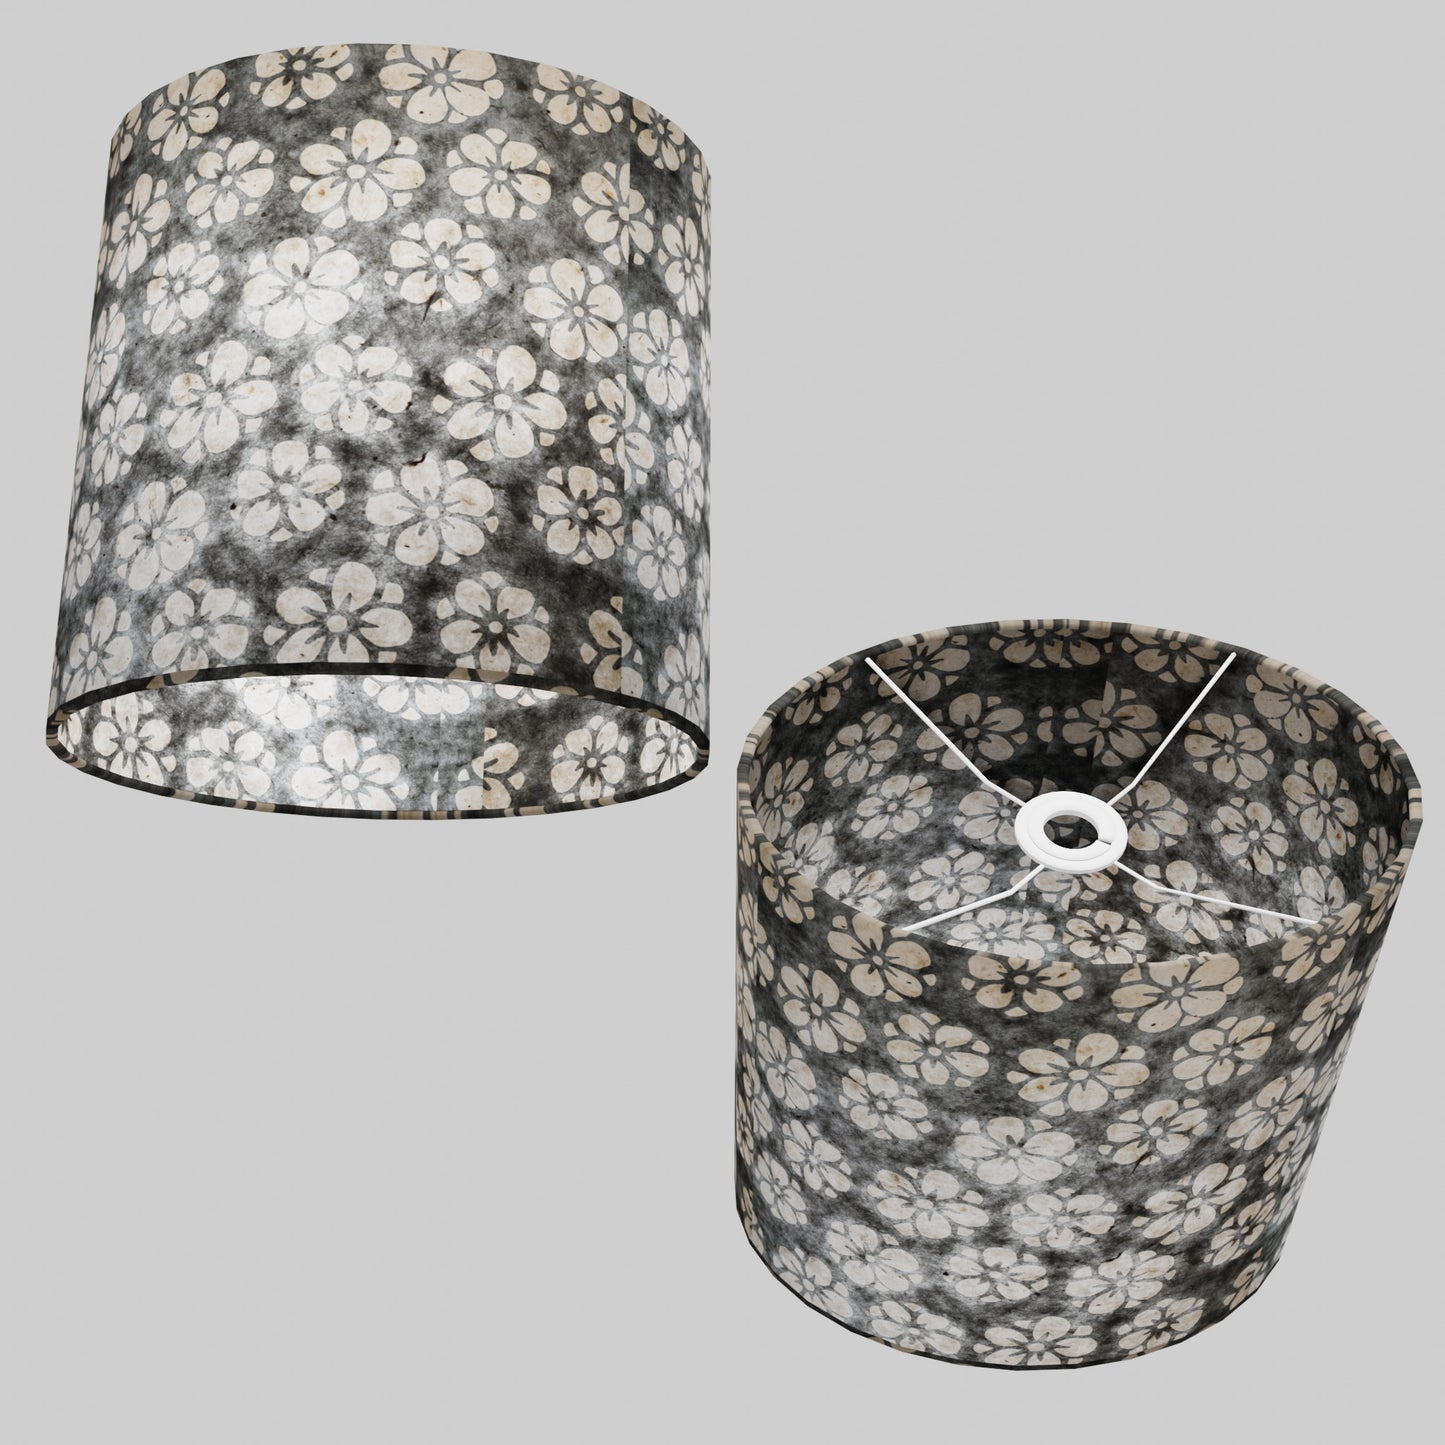 Oval Lamp Shade - P77 - Batik Star Flower Grey, 30cm(w) x 30cm(h) x 22cm(d)